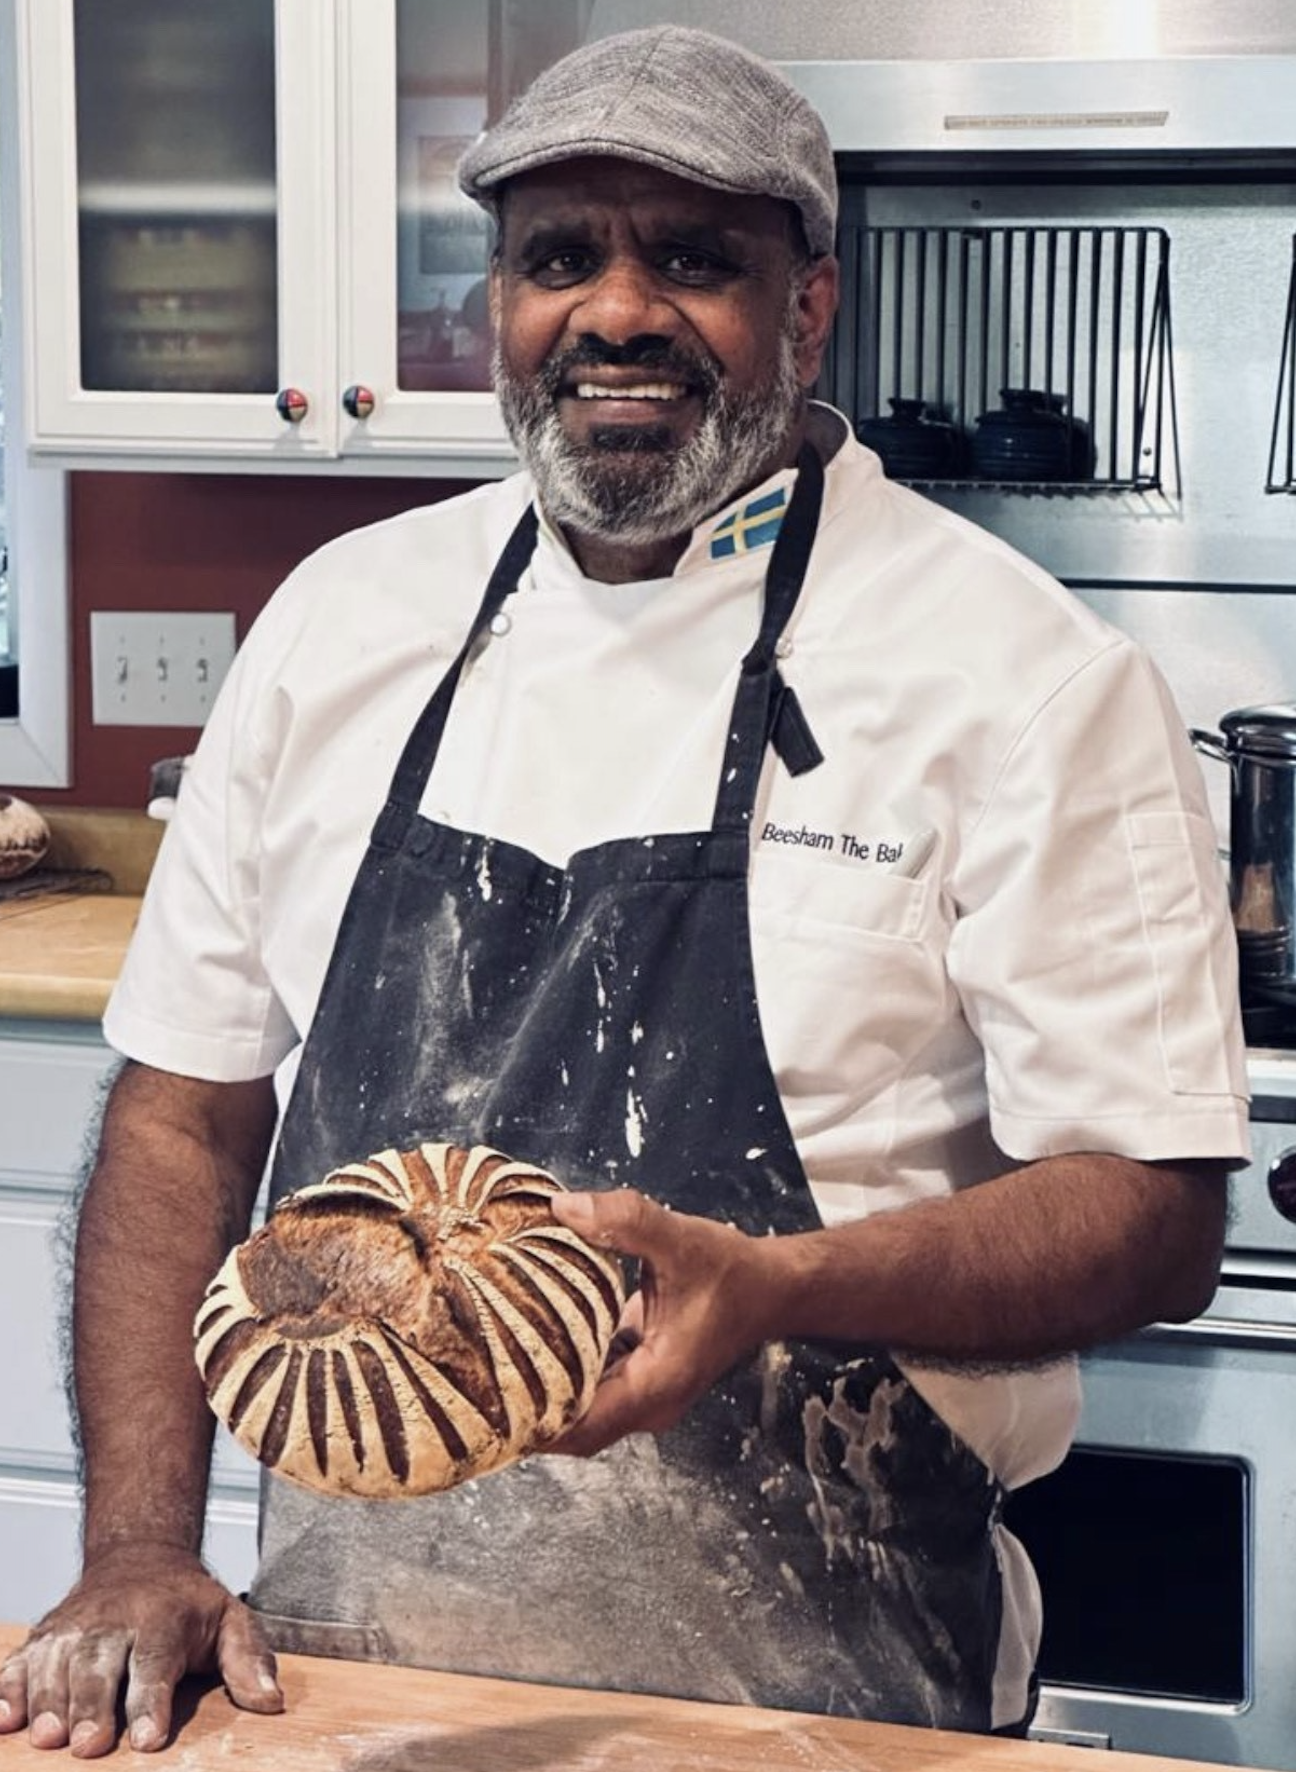 sourdough bread sweden masterclass with master baker chef recipe creator Beesham Soogrim aka Beesham The Baker on Instagram 21